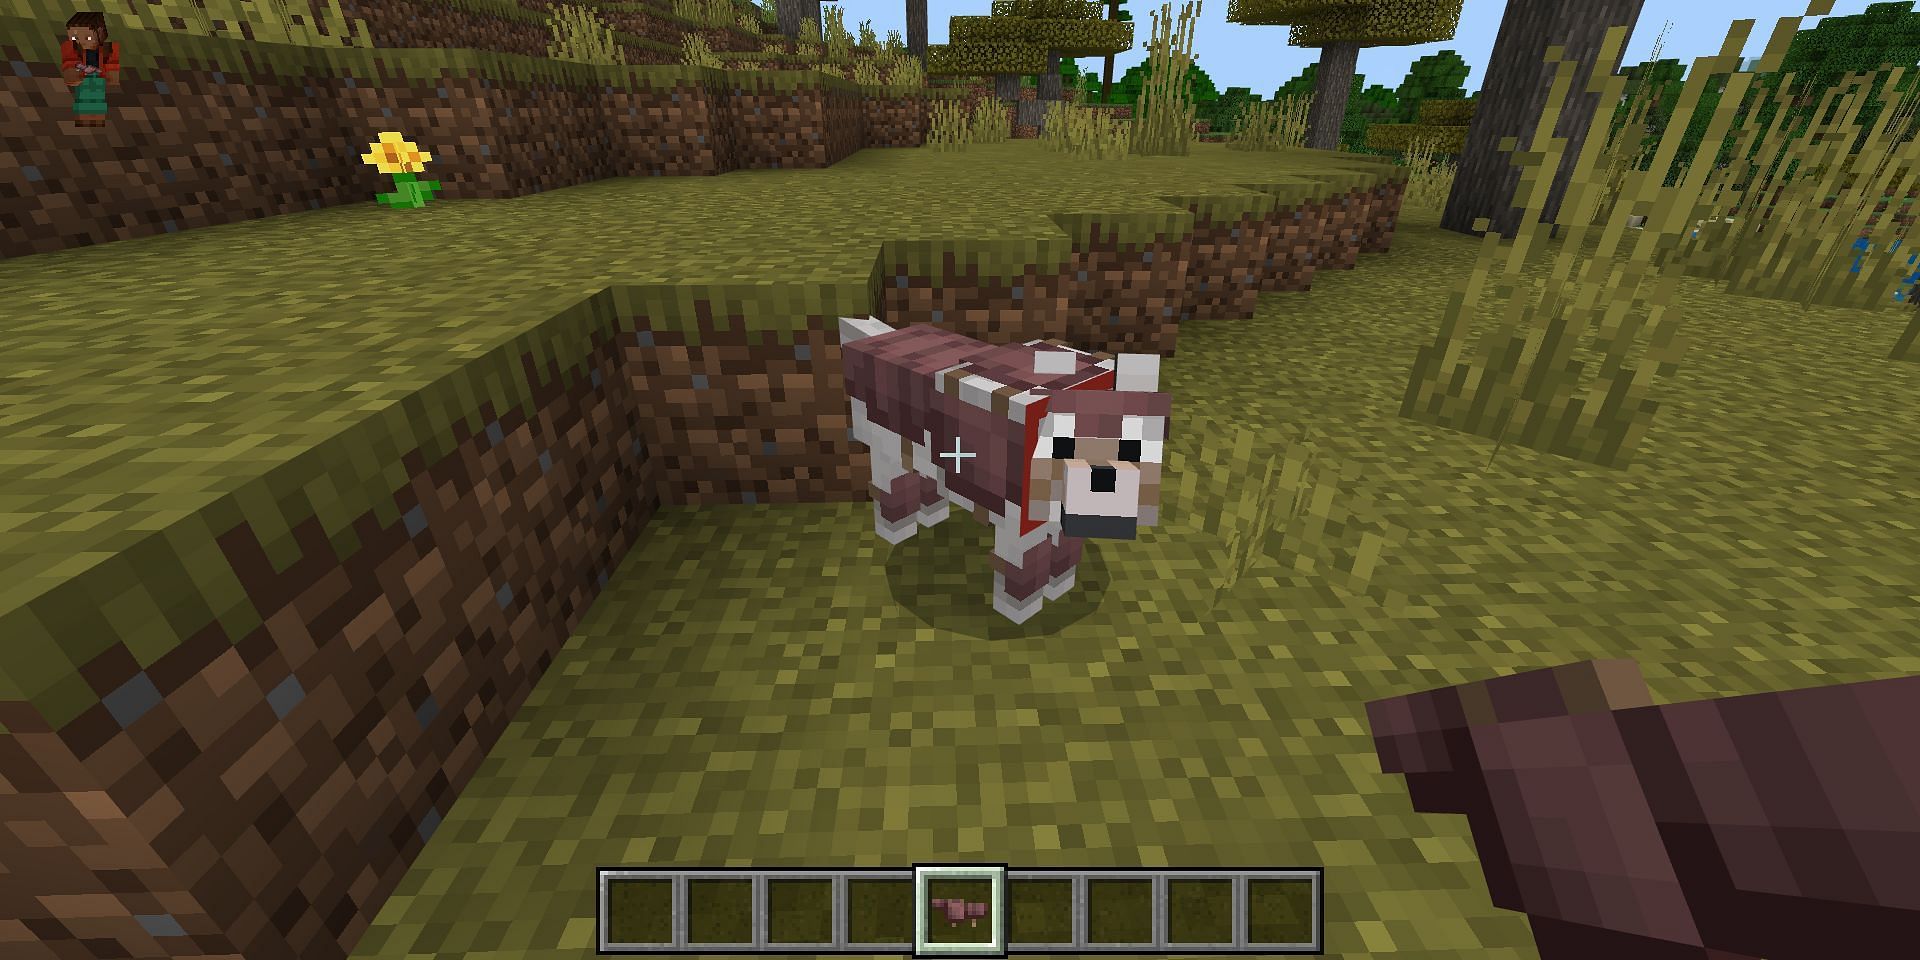 Wolf armor in beta Minecraft. (Image via Mojang)